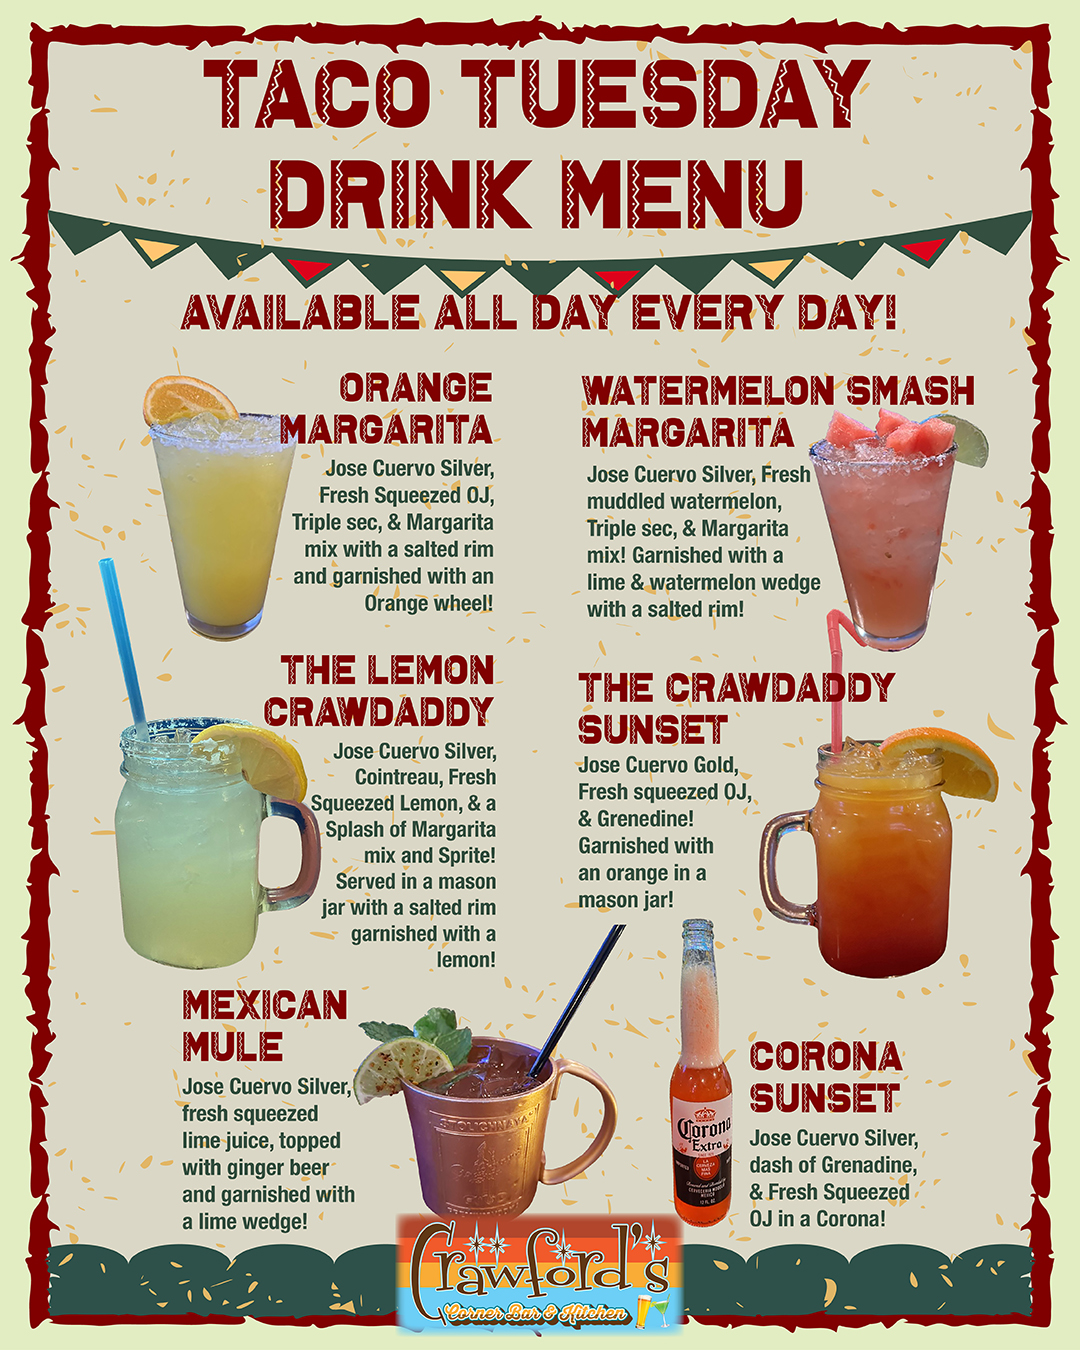 Taco tuesday drink menu.